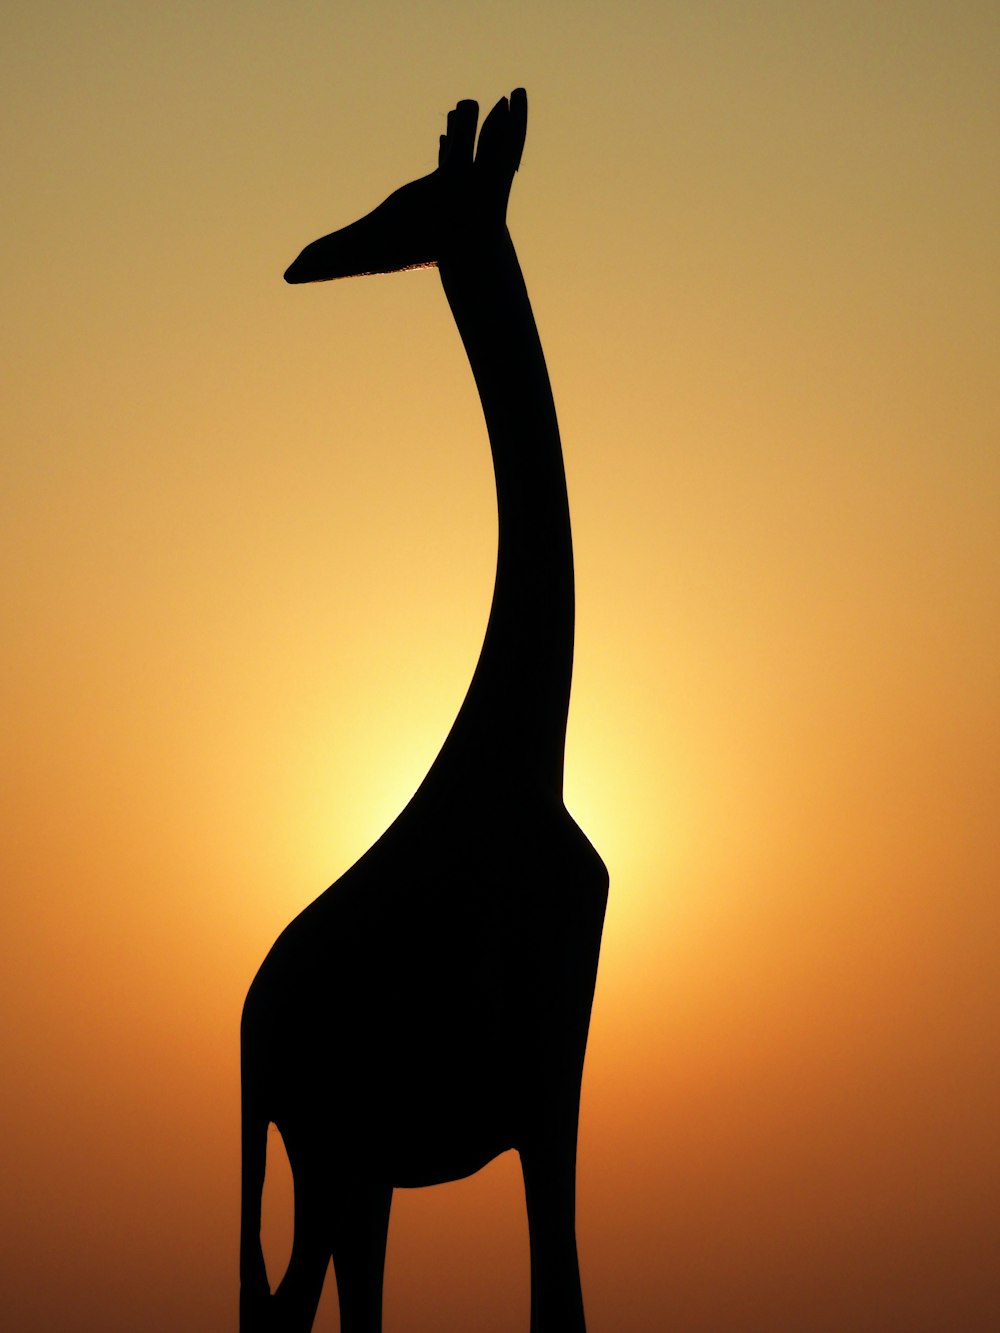 silhouette of giraffe